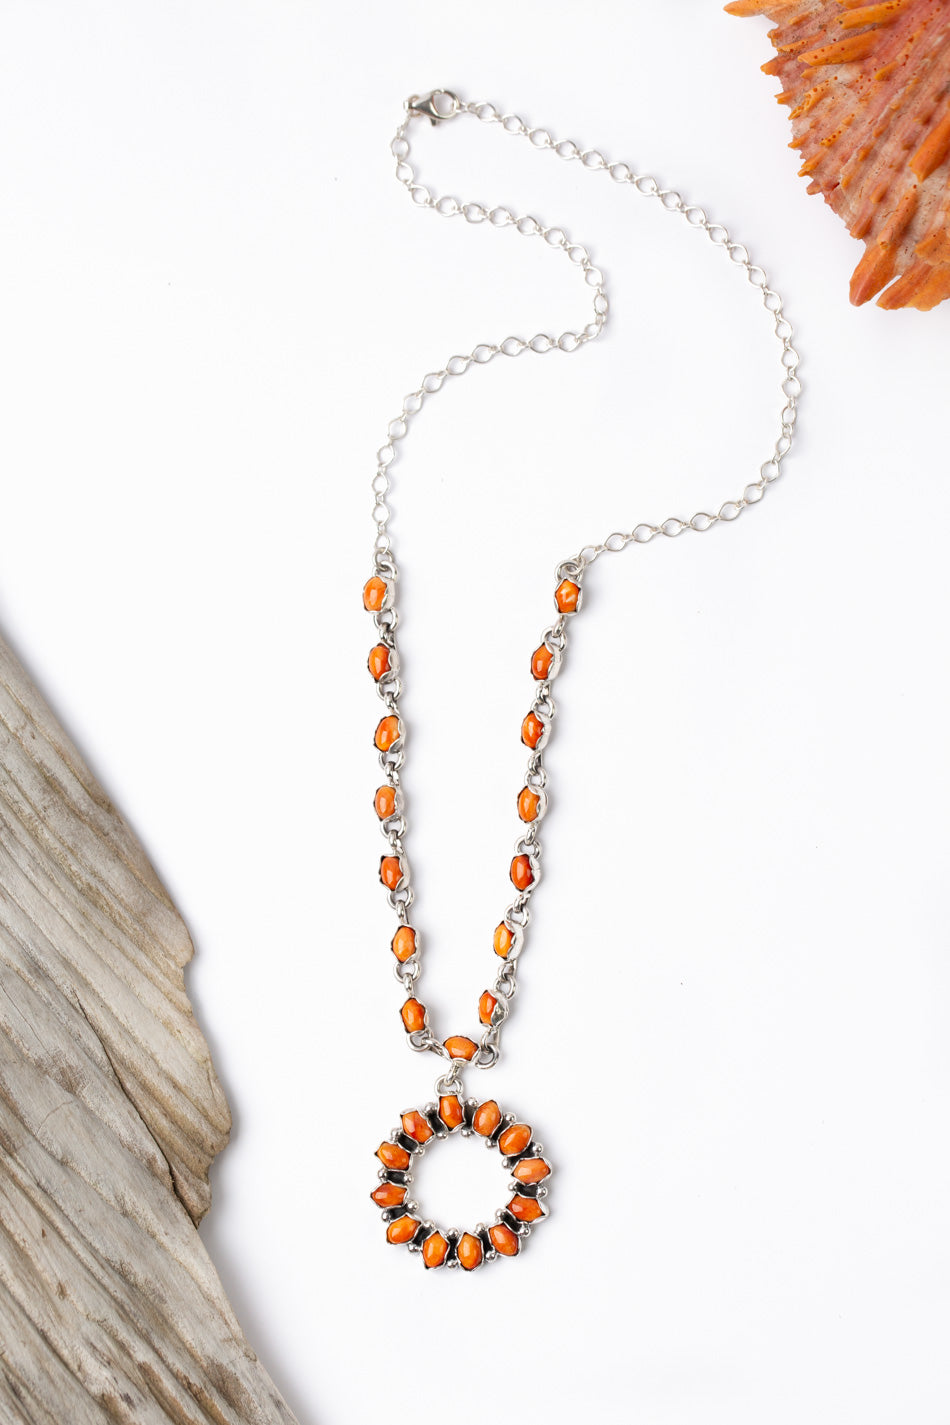 Betty Tom 20" Orange Spiny Oyster Statement Necklace